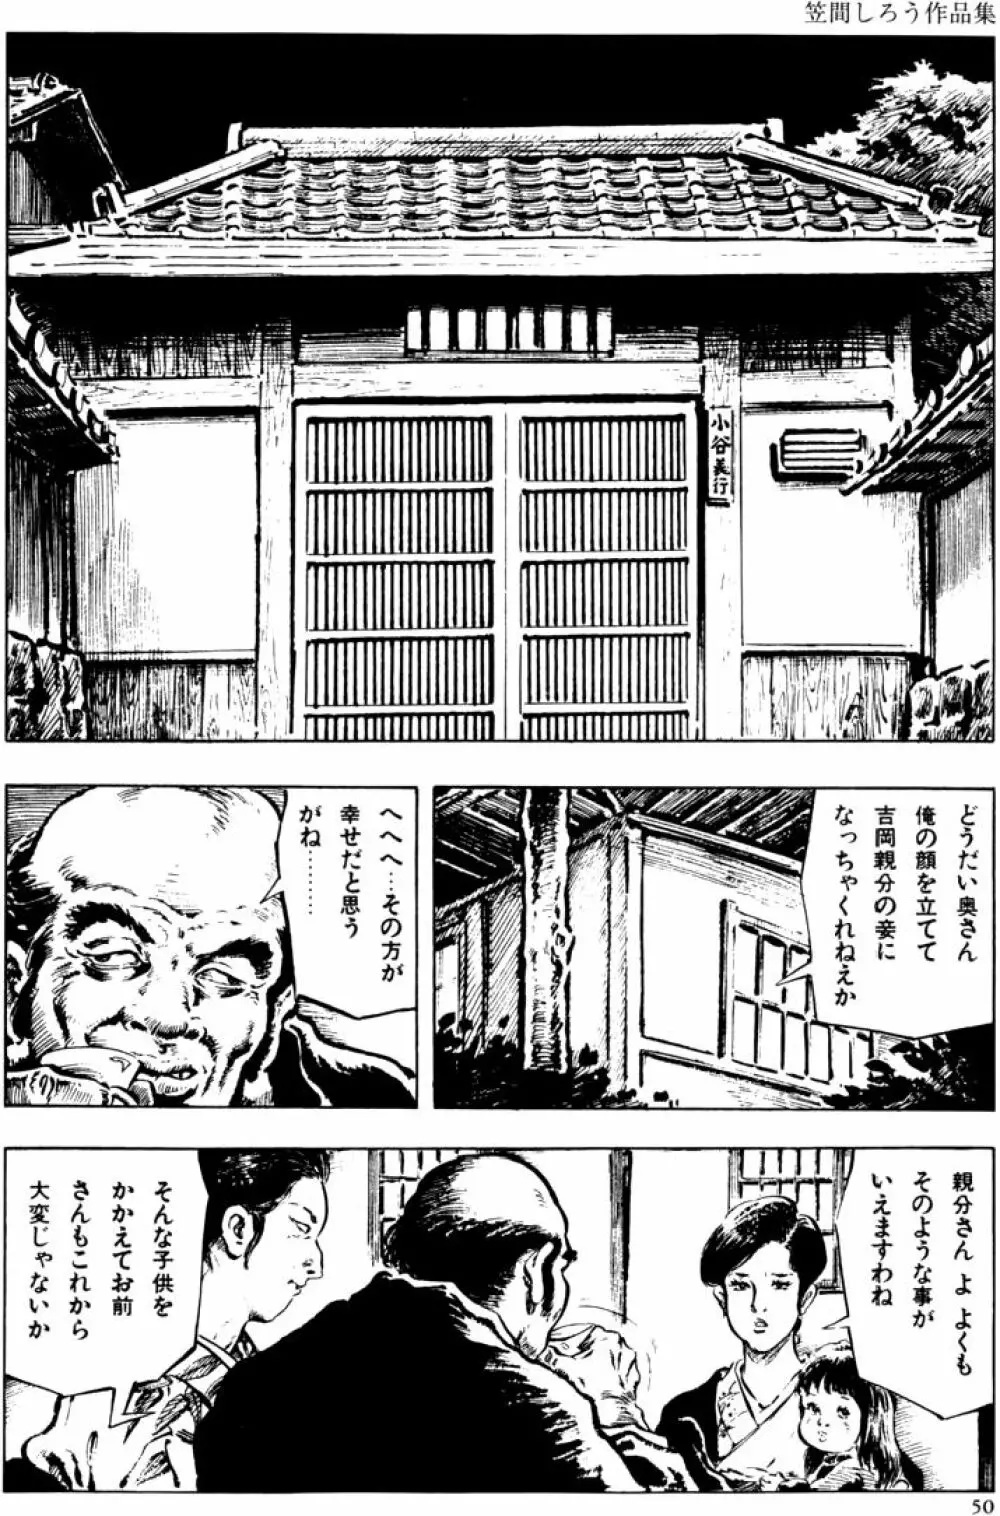 団鬼六原作劇画集成2 19ページ